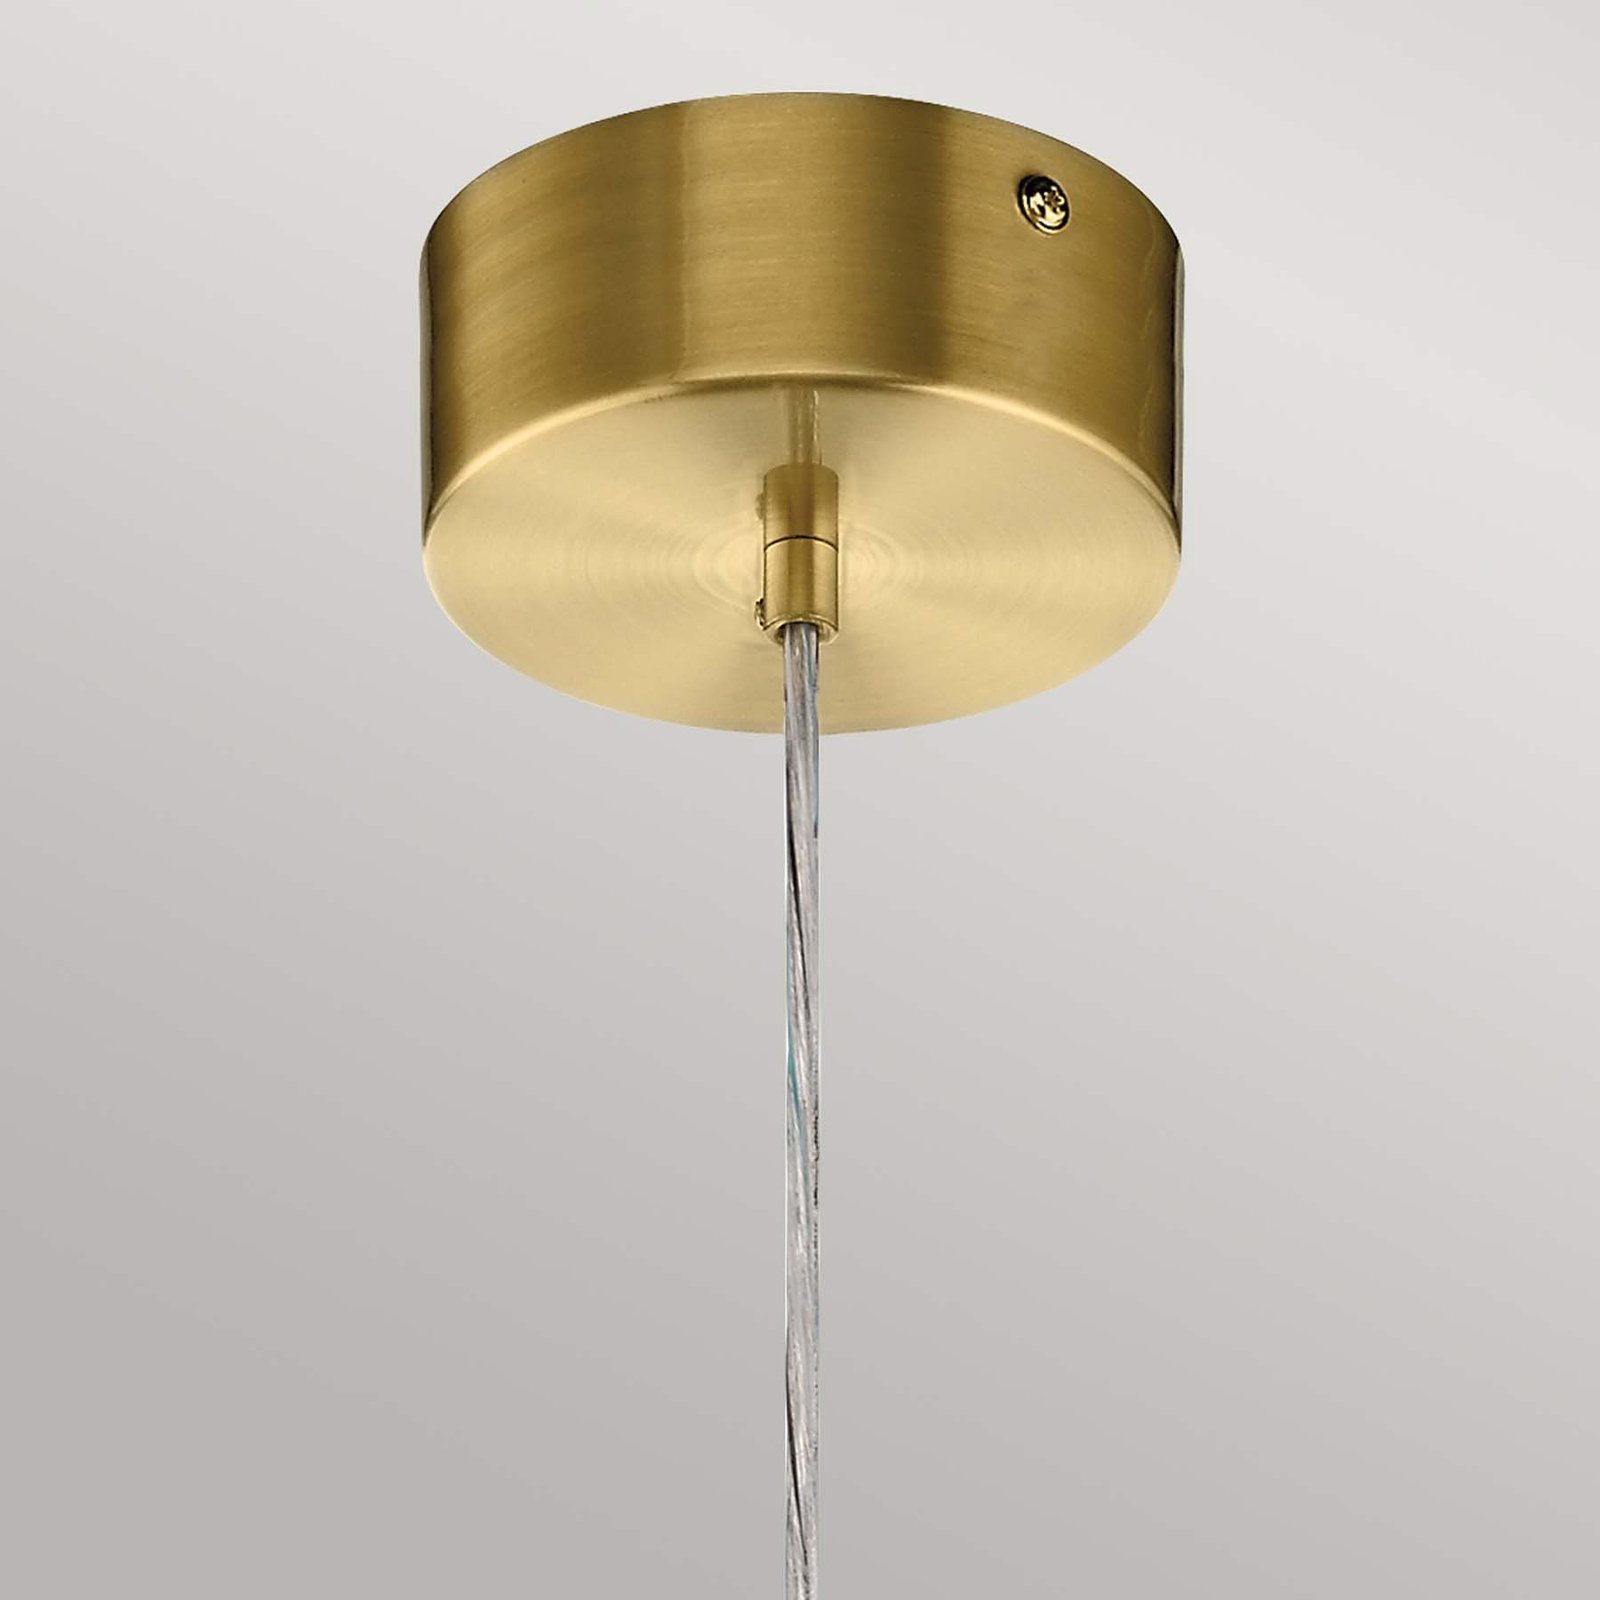 Moonlit LED hanglamp, goudkleurig, aluminium, Ø 20 cm, globe